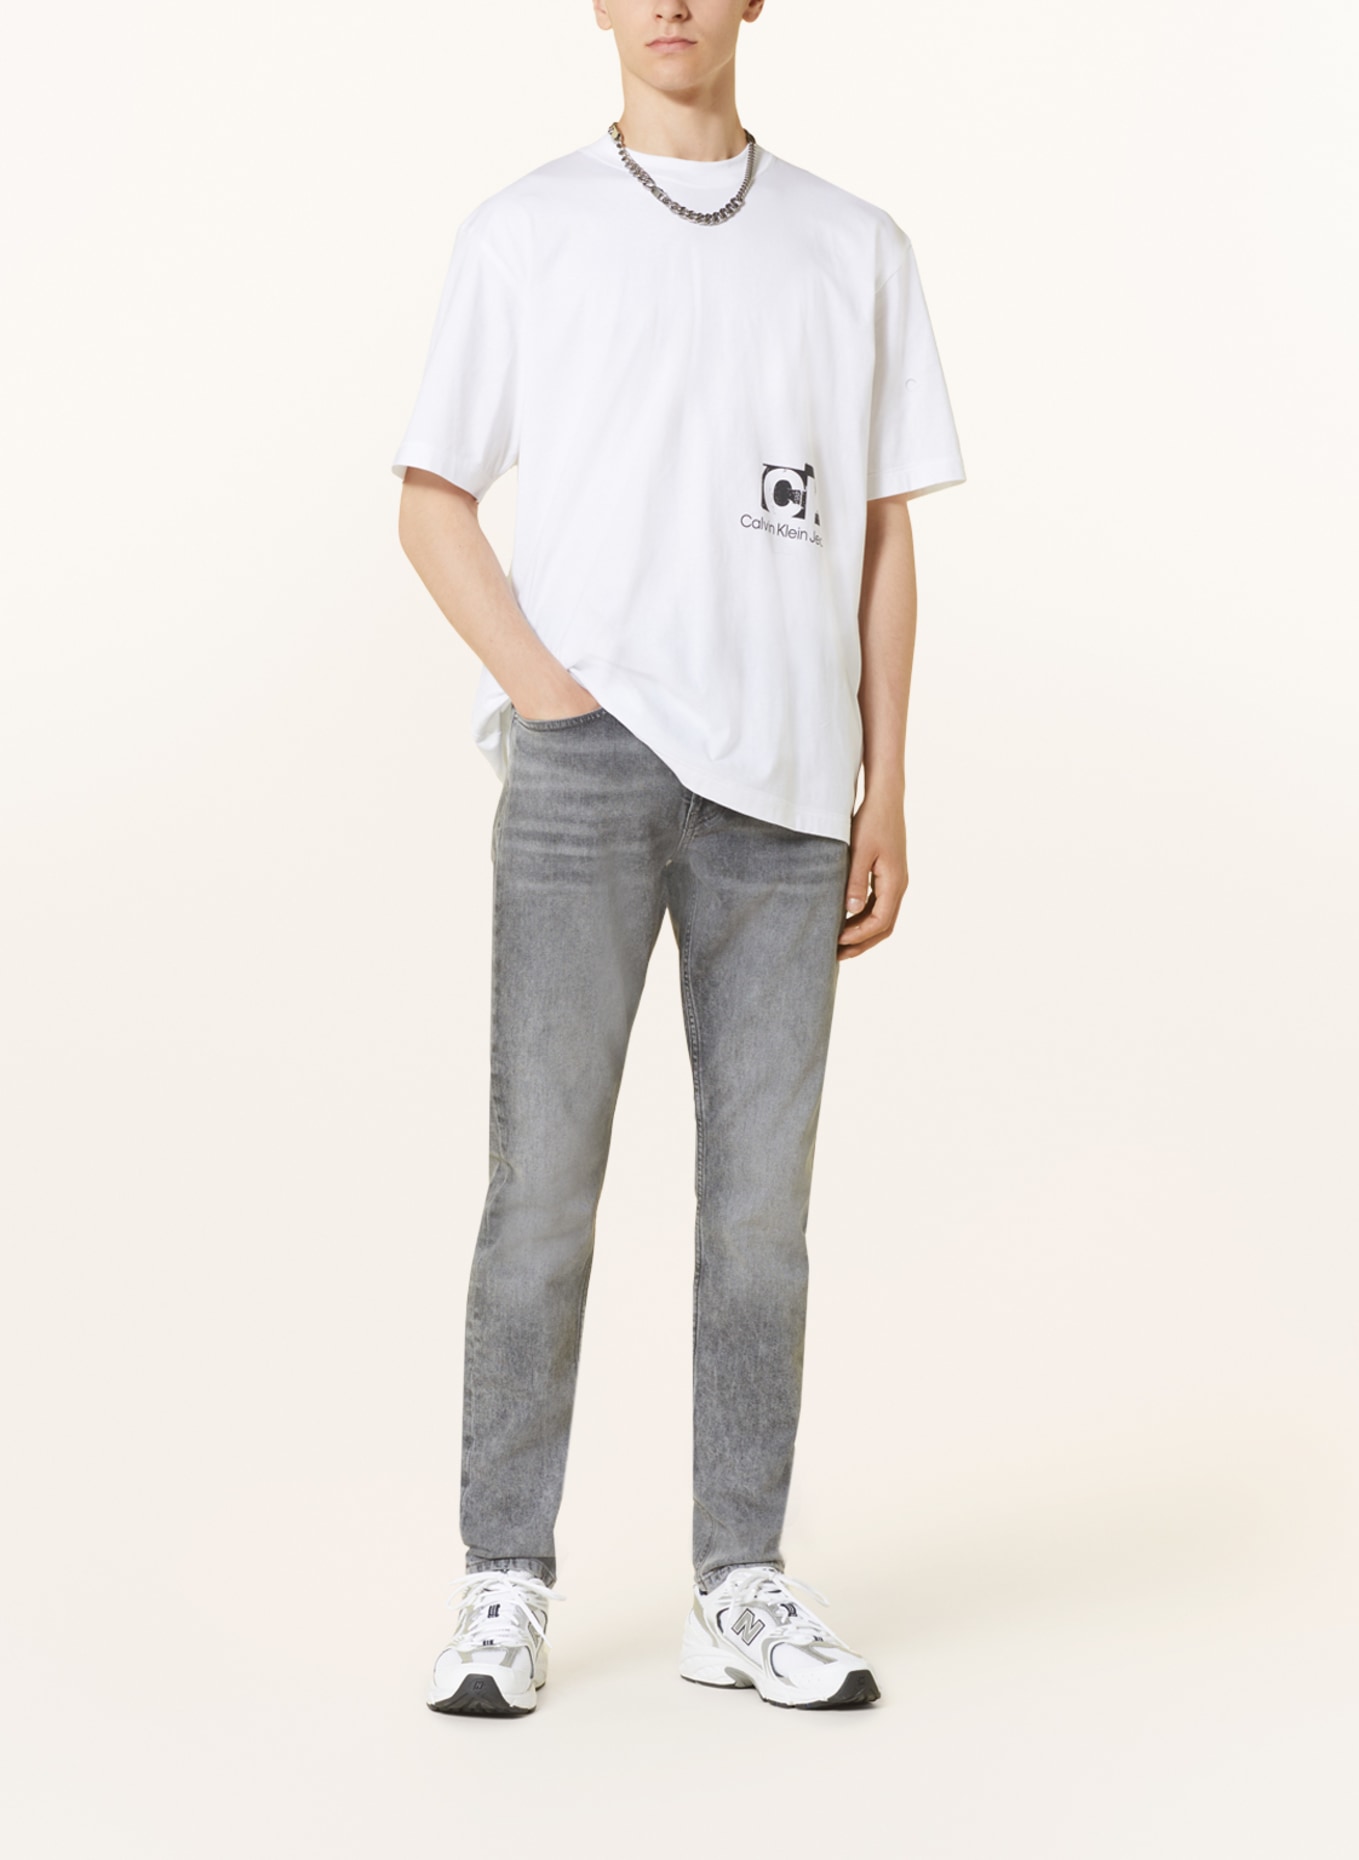 Jeans weiss T-Shirt Calvin in Klein